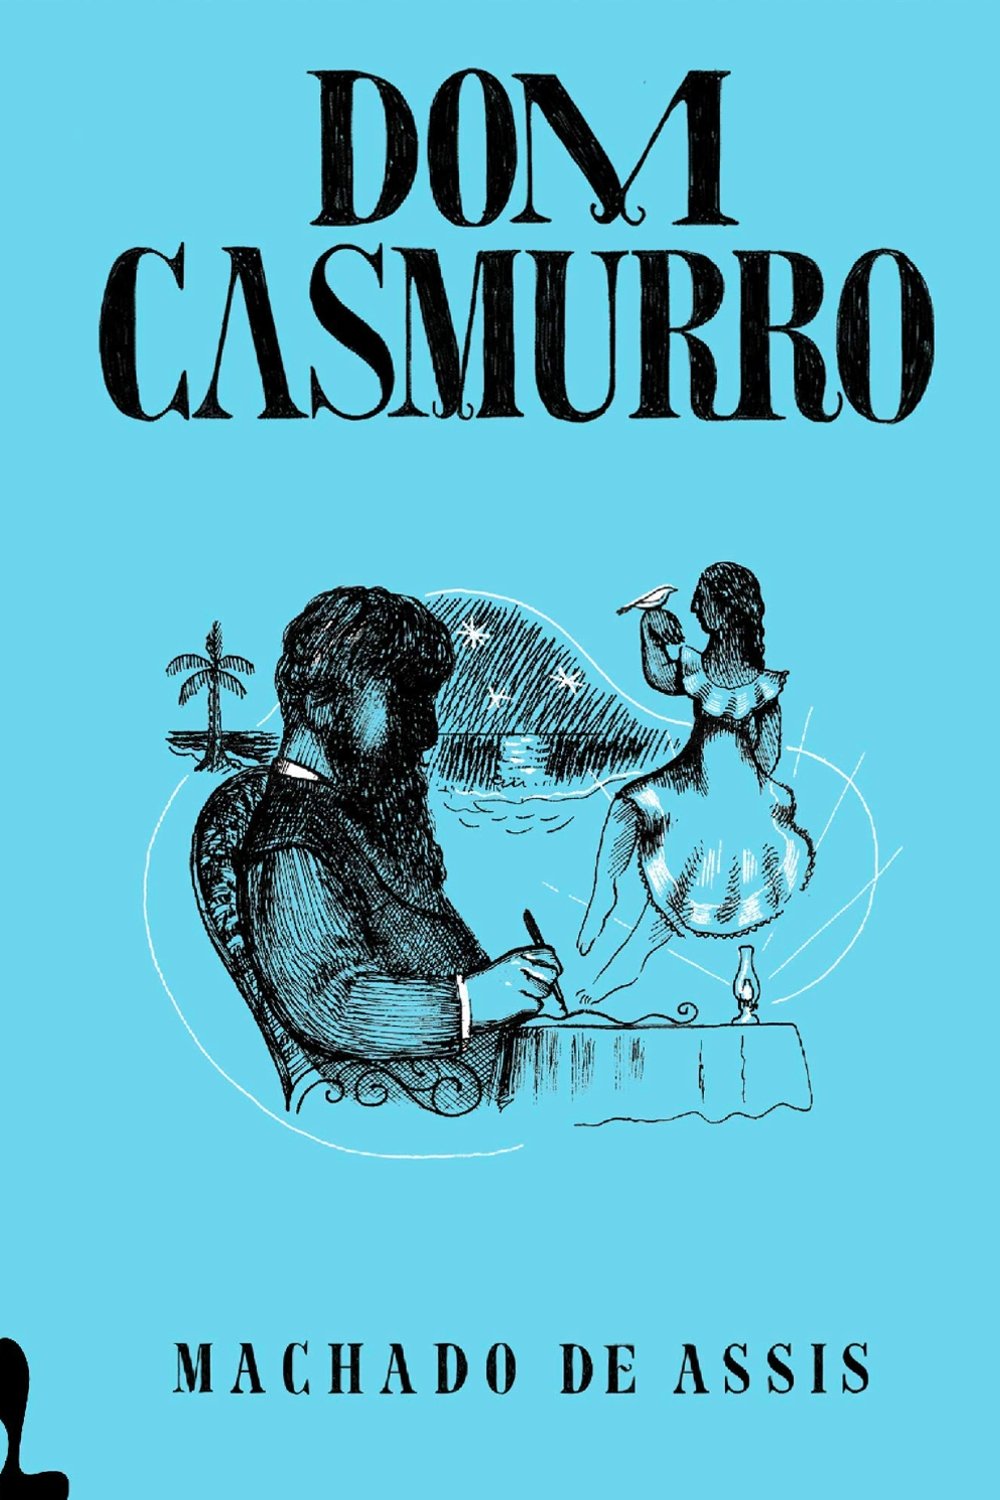 Dom Casmurro - lista de best sellers - livros - best sellers - livros que custam até 30 reais - https://stealthelook.com.br